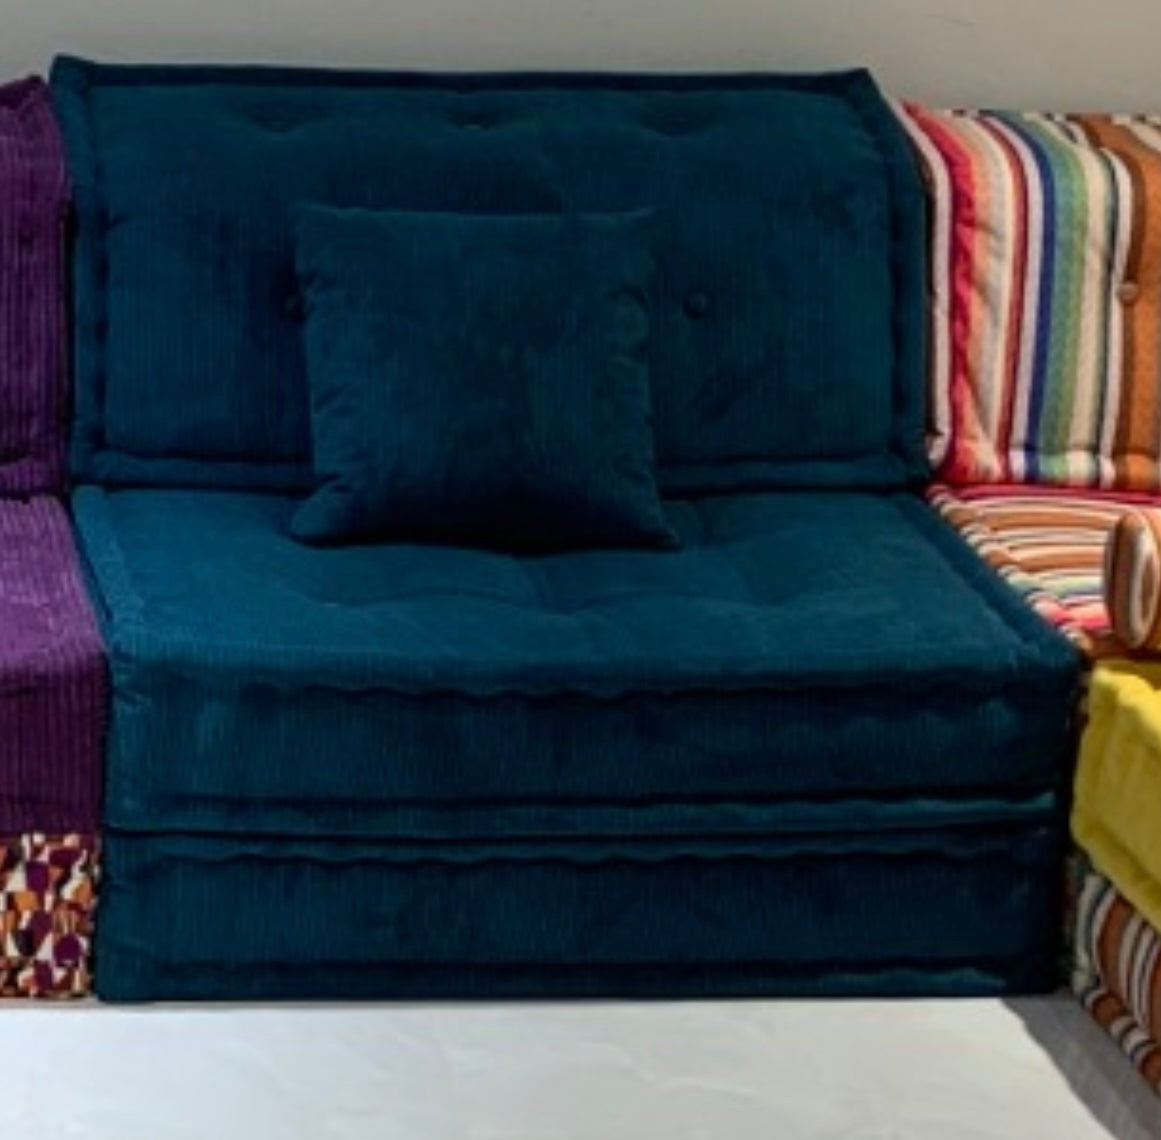 Bohem single lounge chair in Blue corduroy.